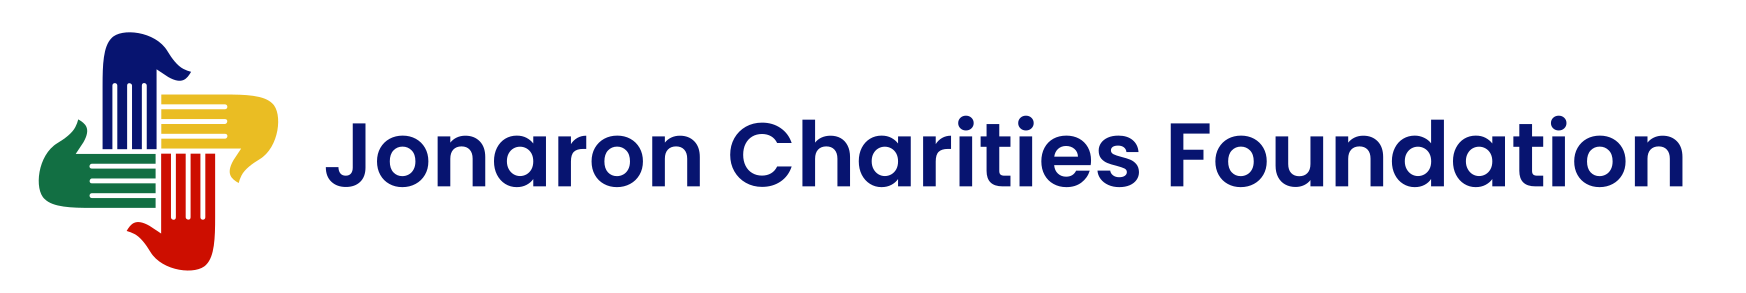 Jonaron Charities Foundation